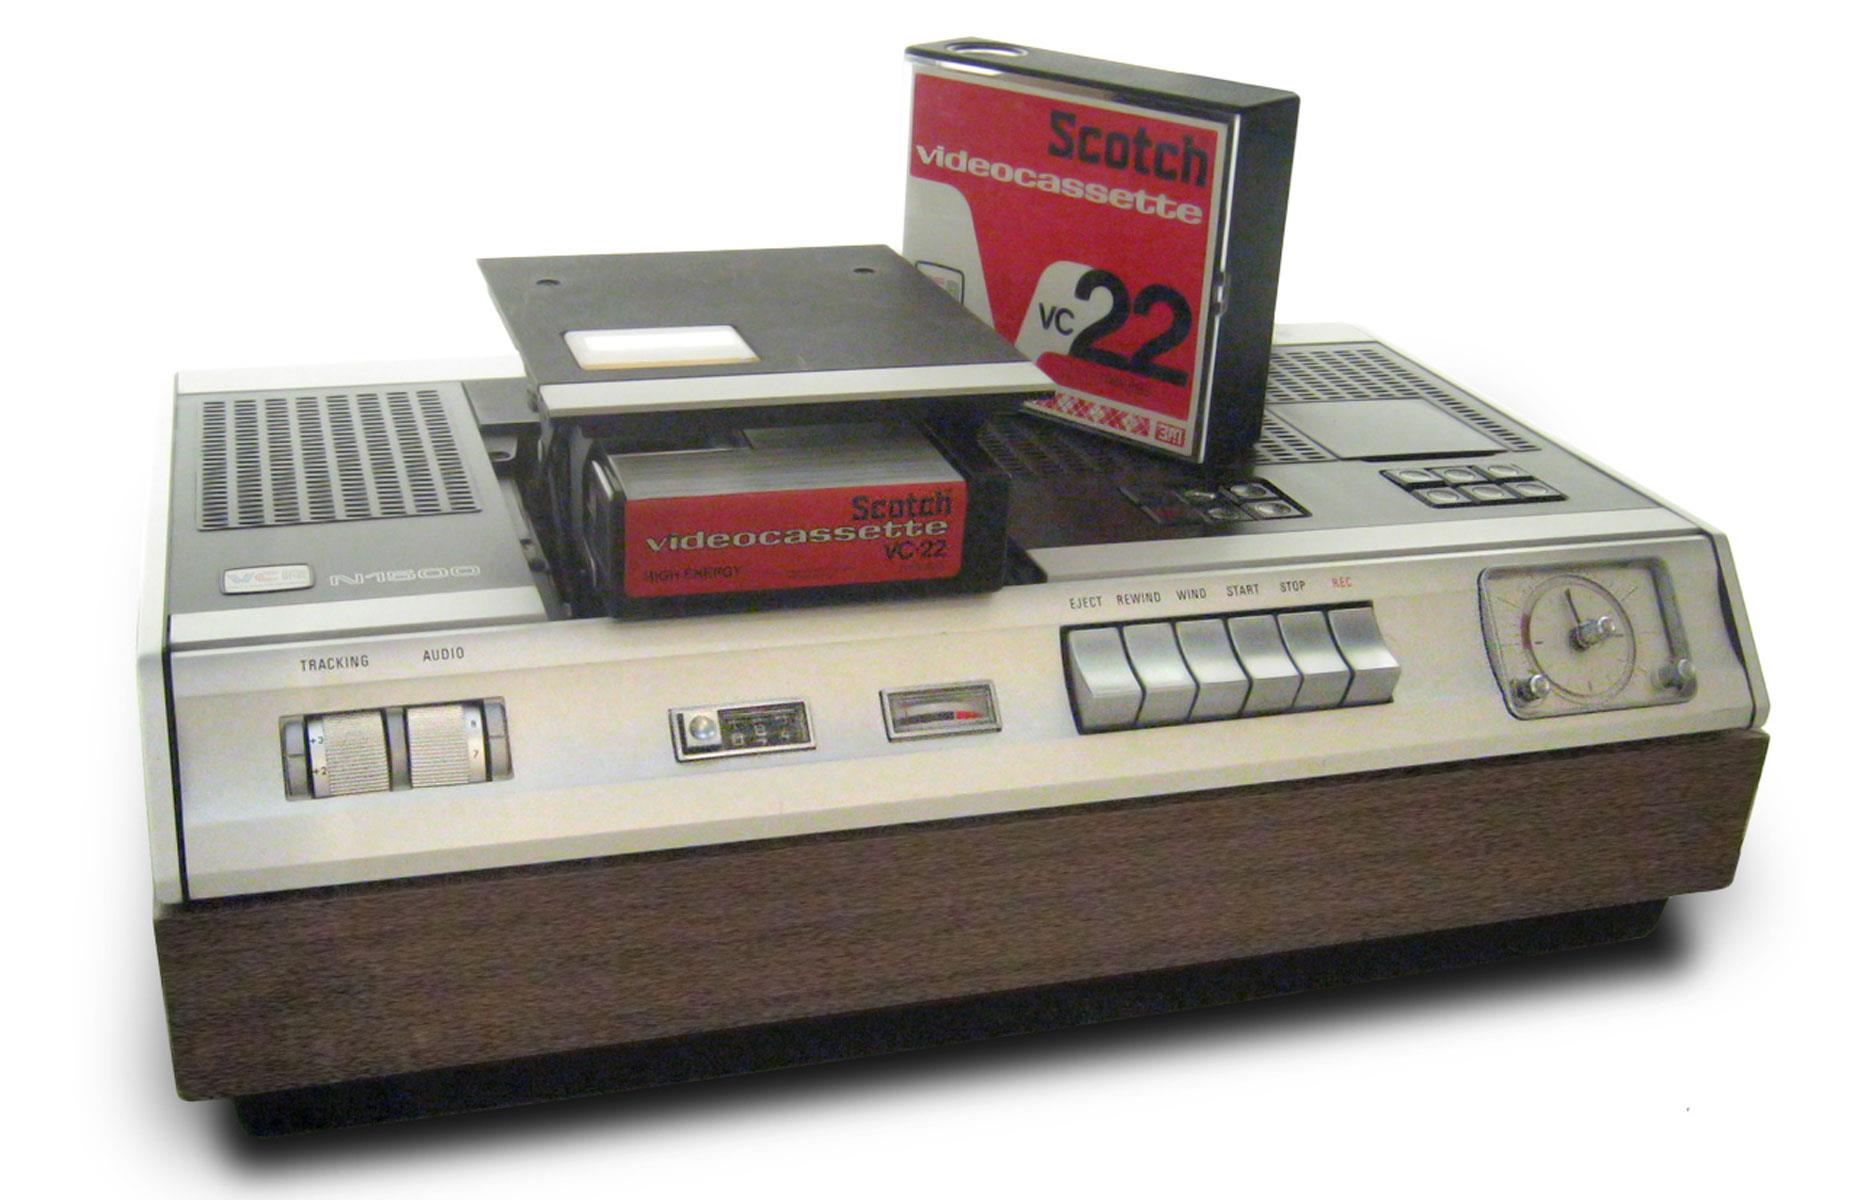 1974: videocassette recorder